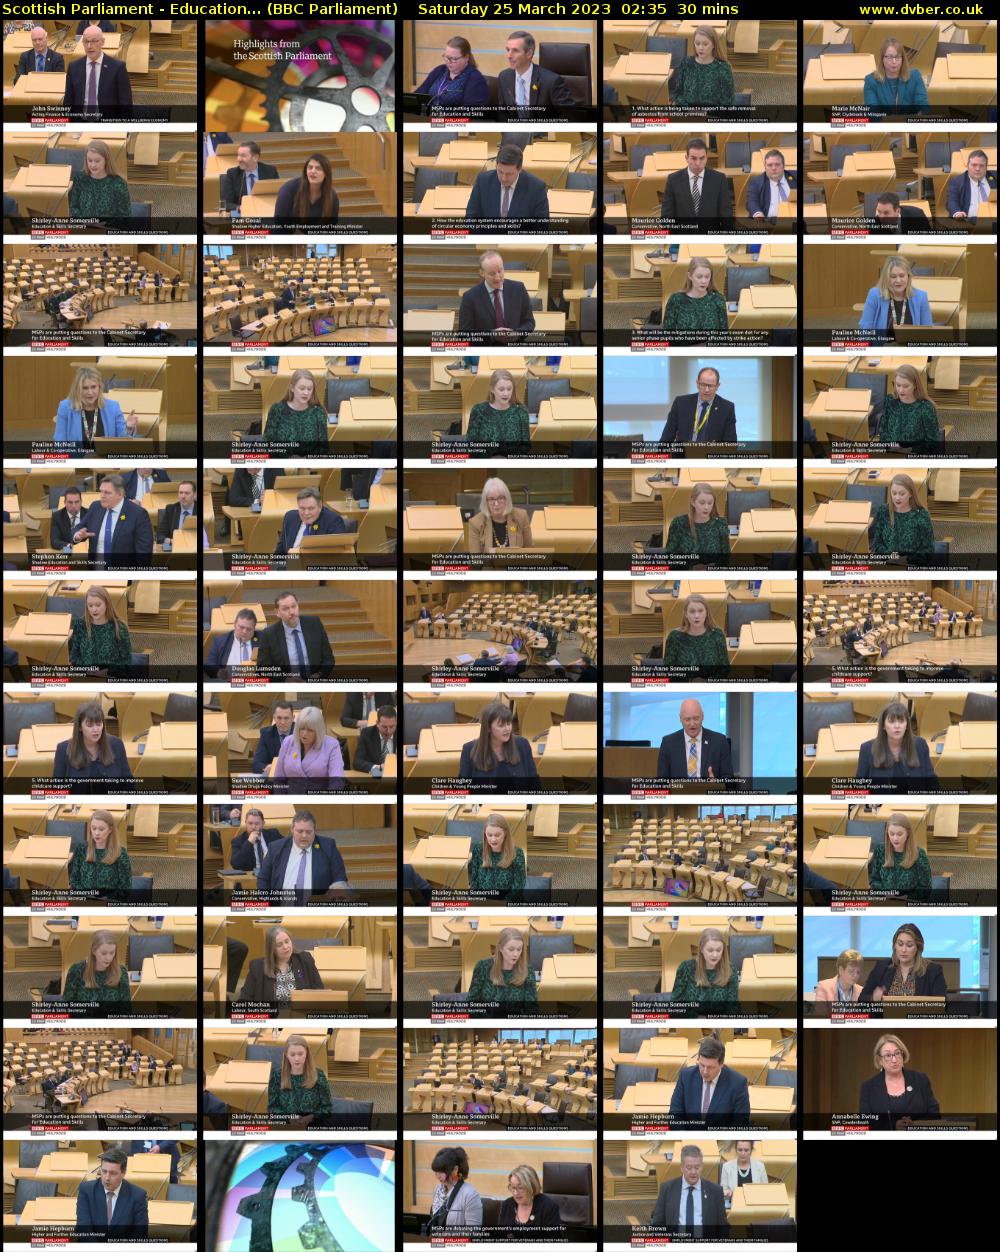 Scottish Parliament - Education... (BBC Parliament) Saturday 25 March 2023 02:35 - 03:05